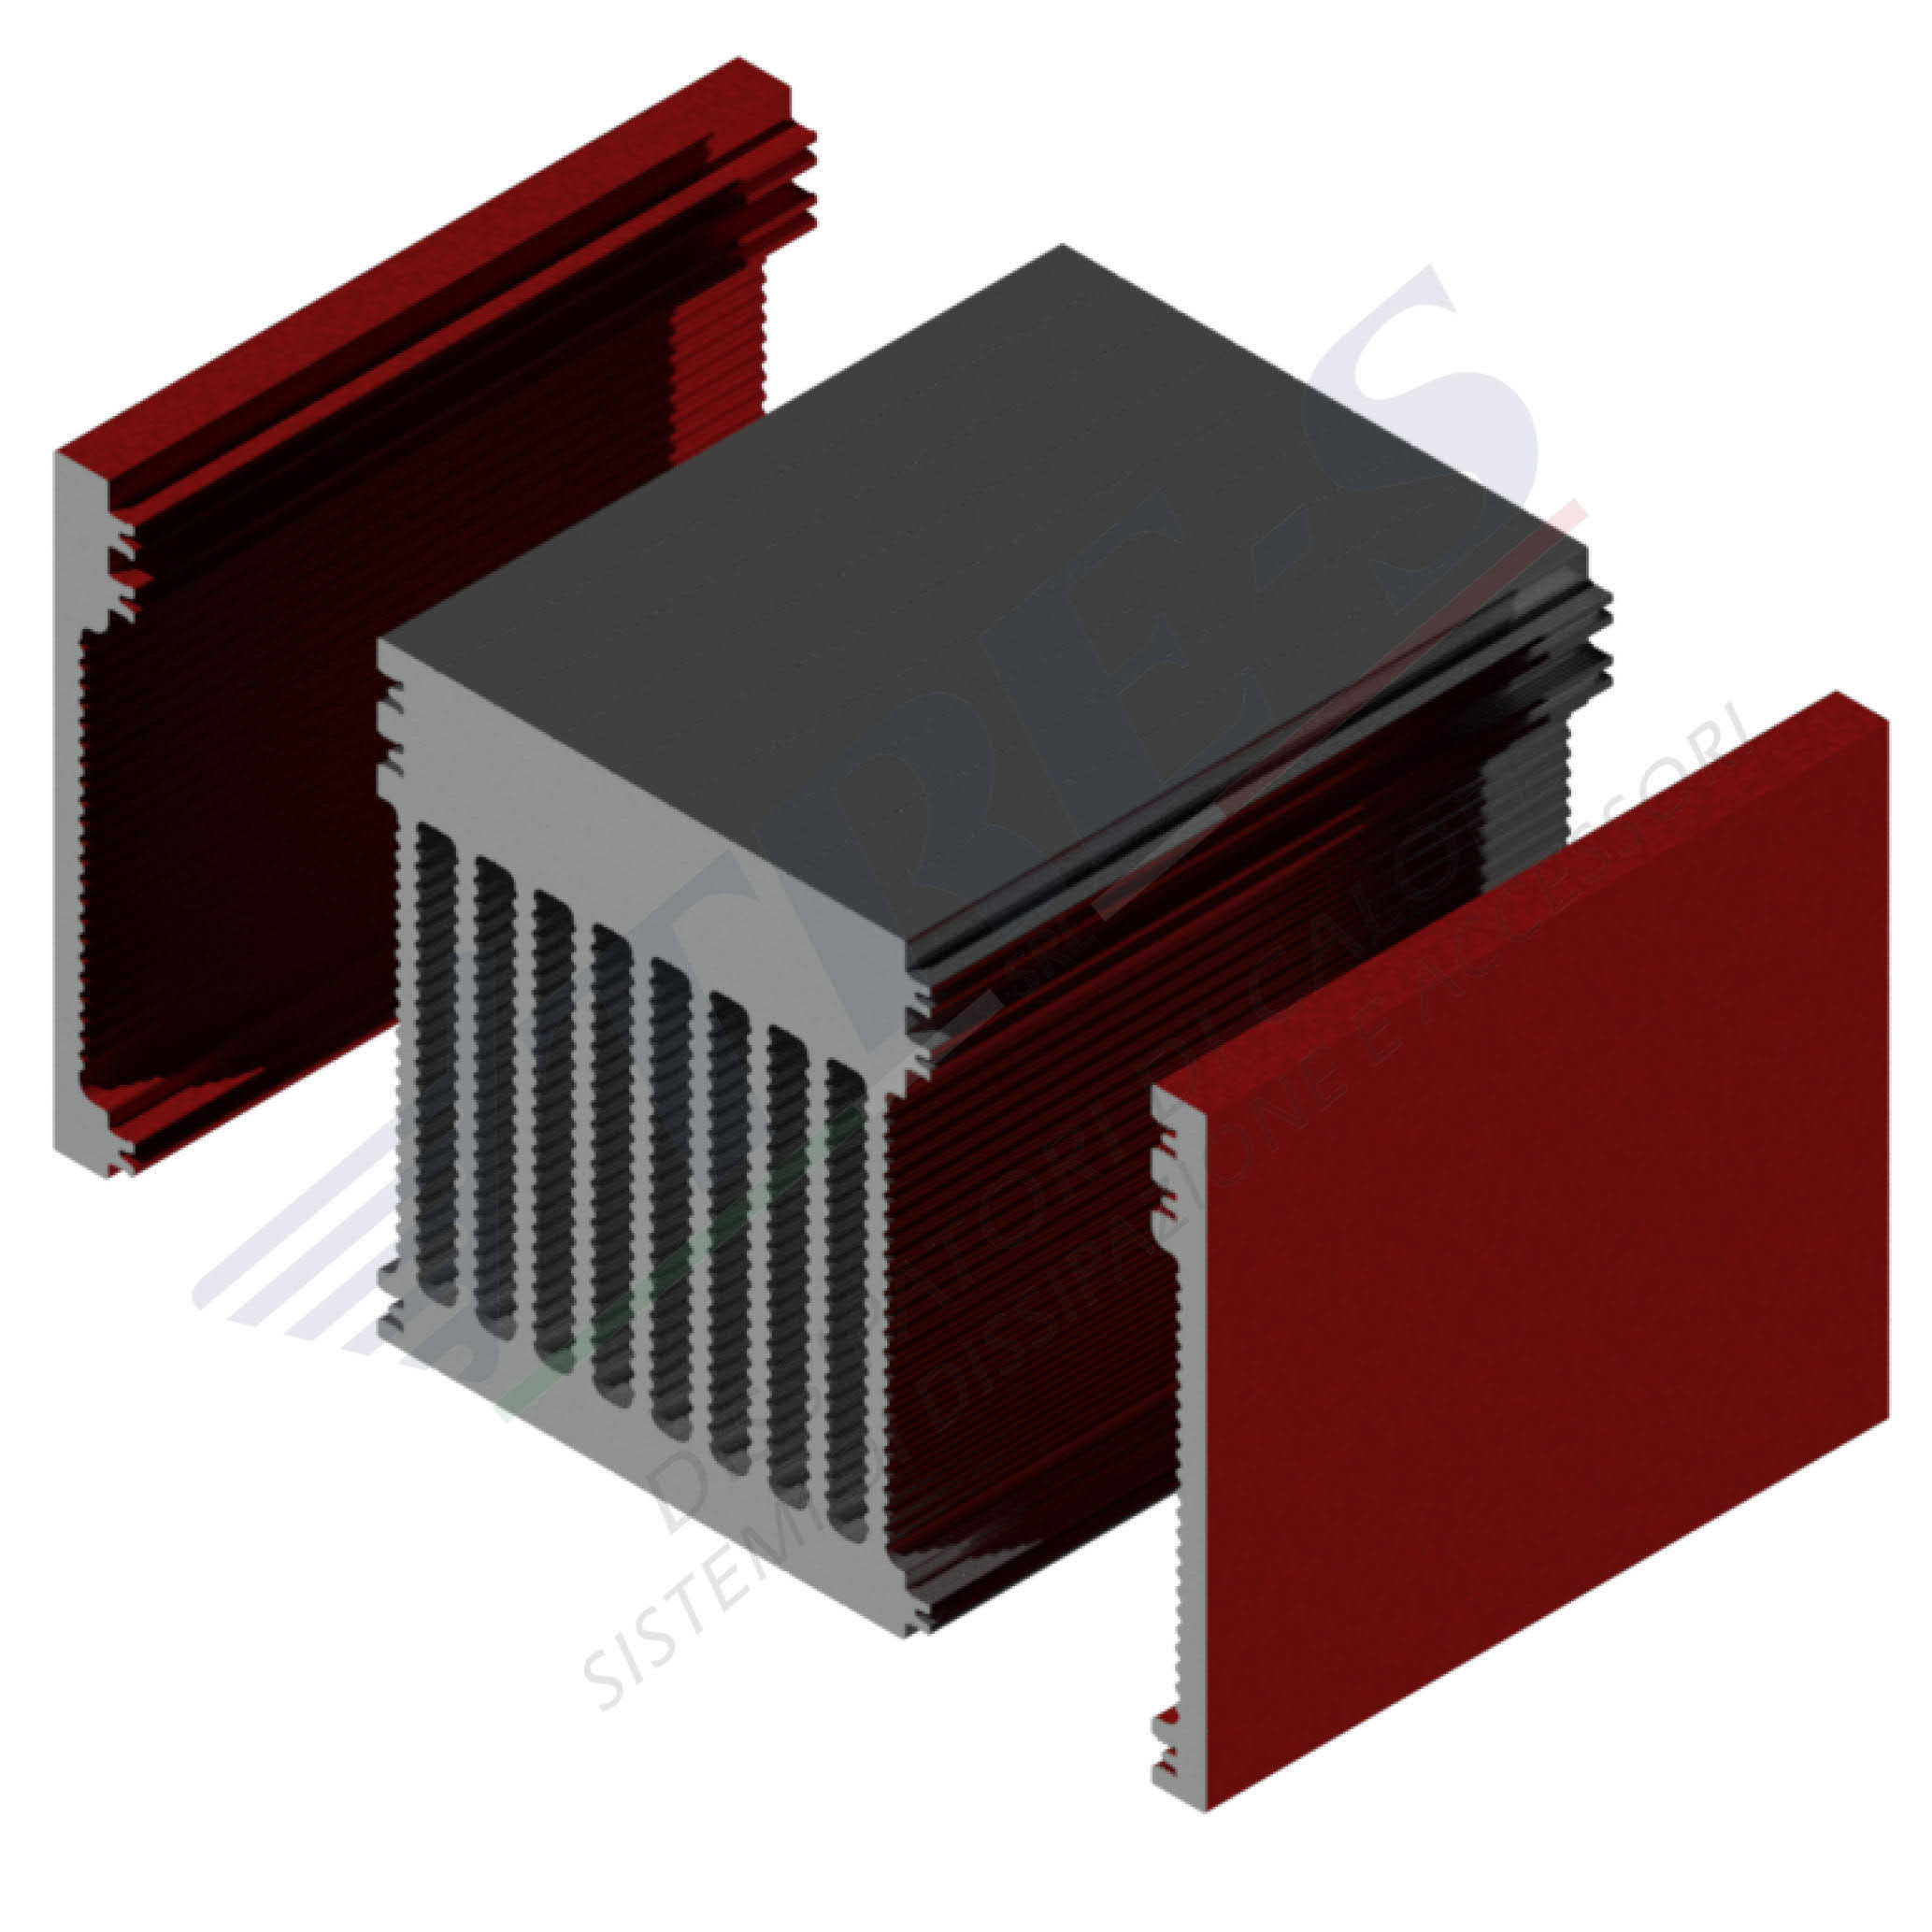 PRI1001 - Embedded heat sinks